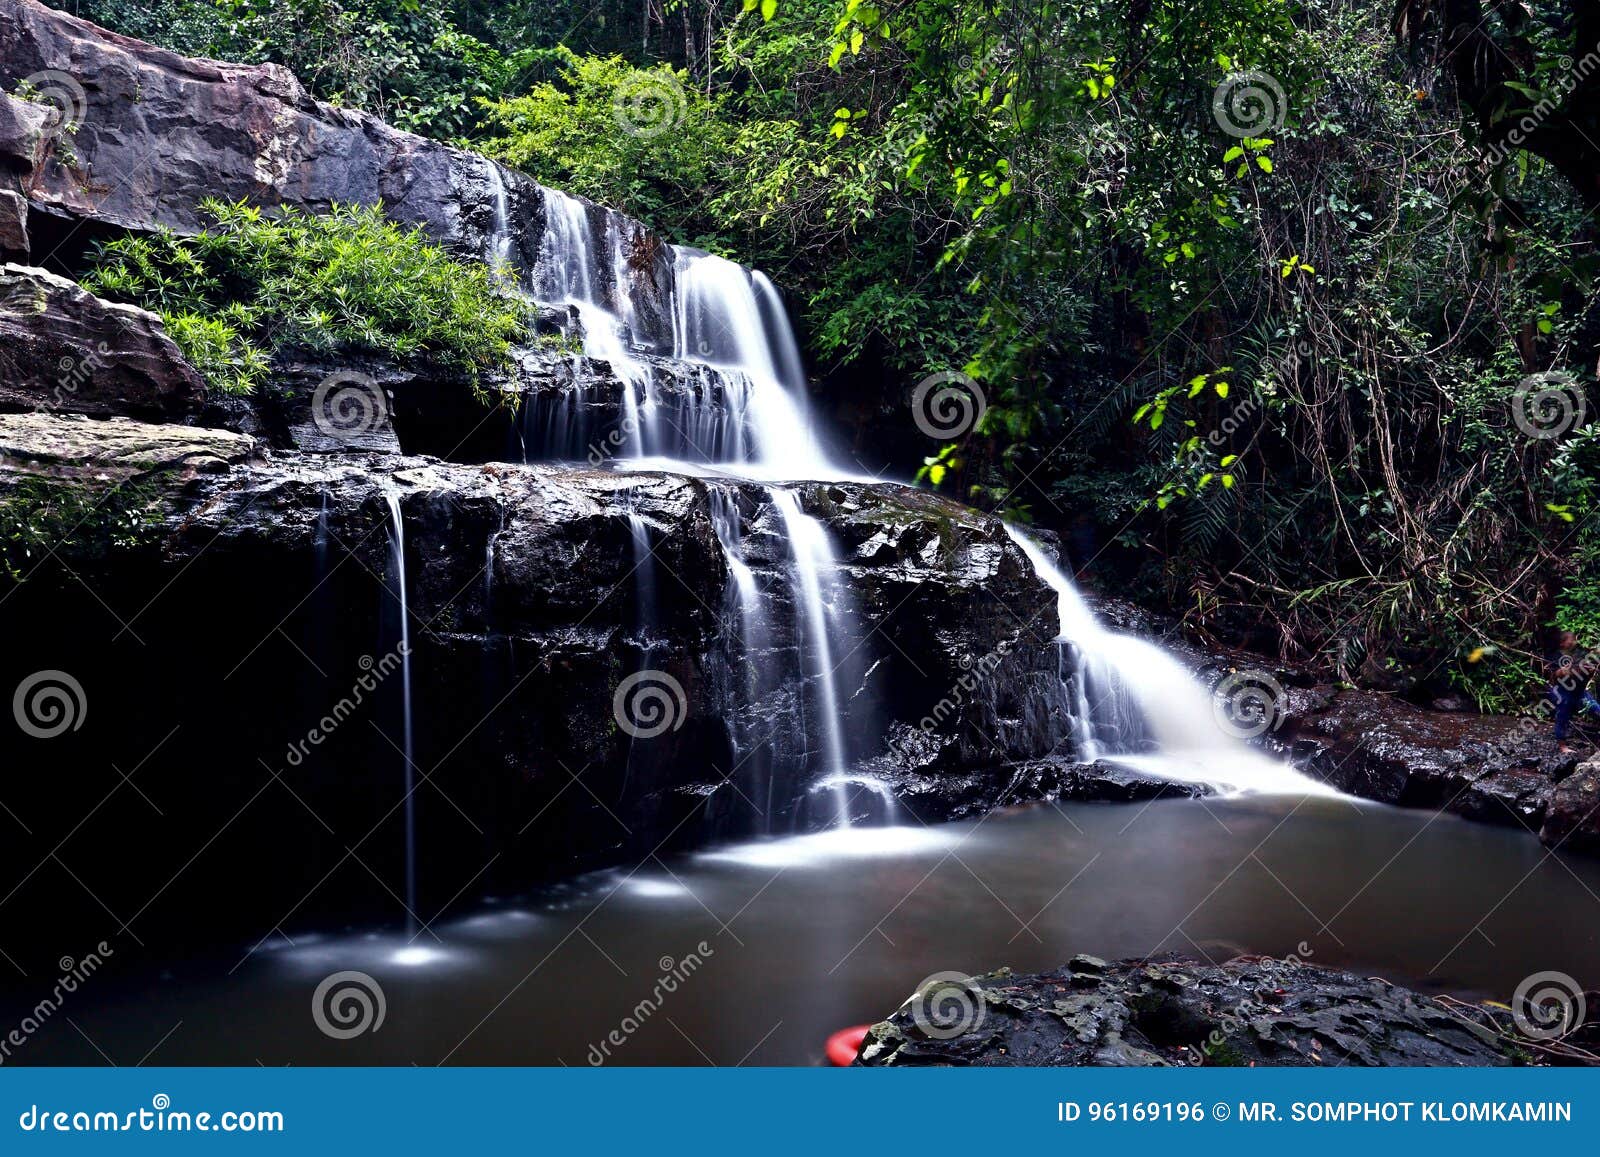 pang sida waterfall